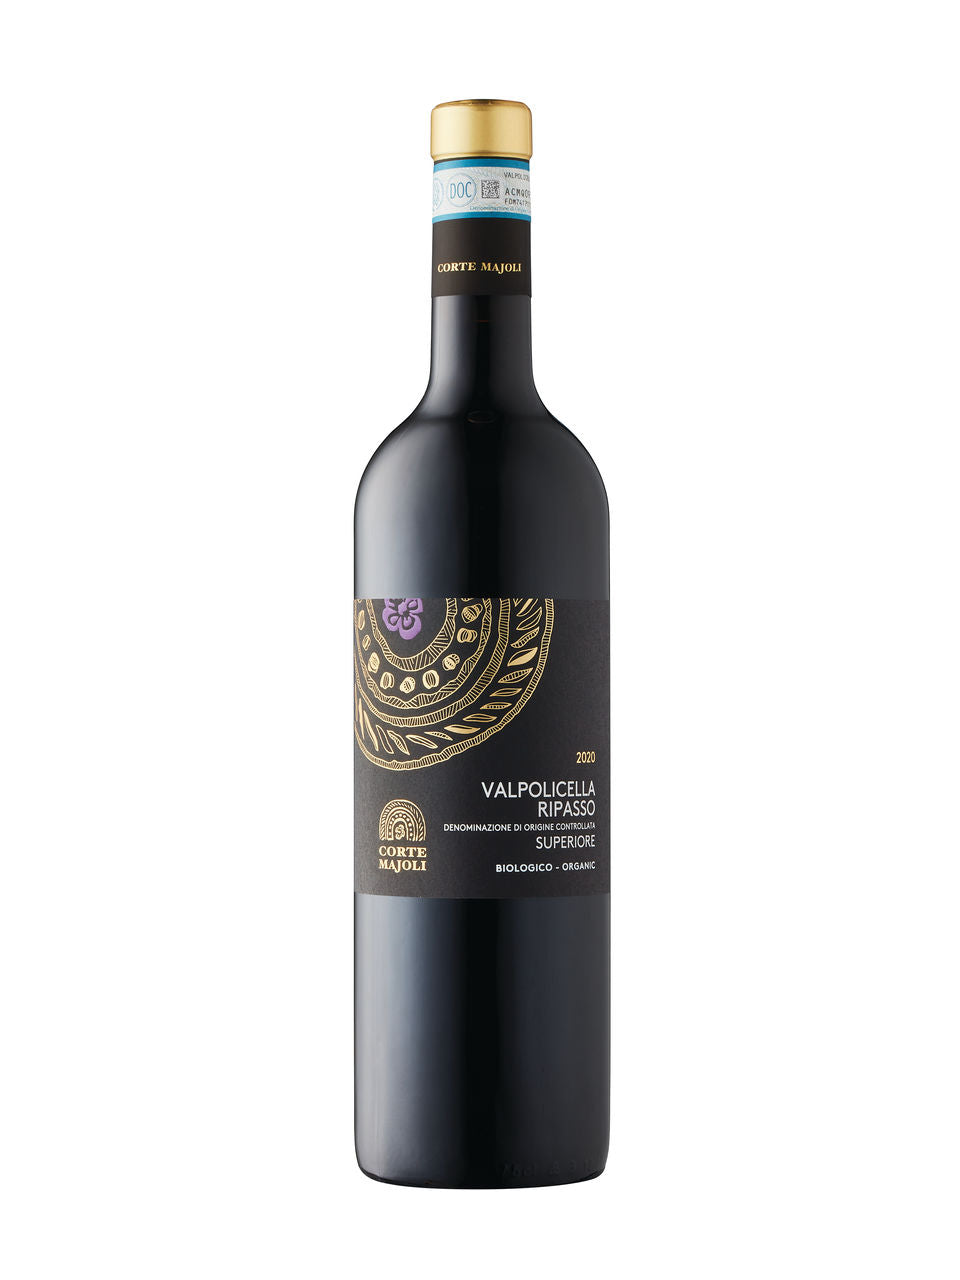 Corte Majoli Ripasso Valpolicella Superiore 2020 Corvina Blend 750 ml bottle VINTAGES